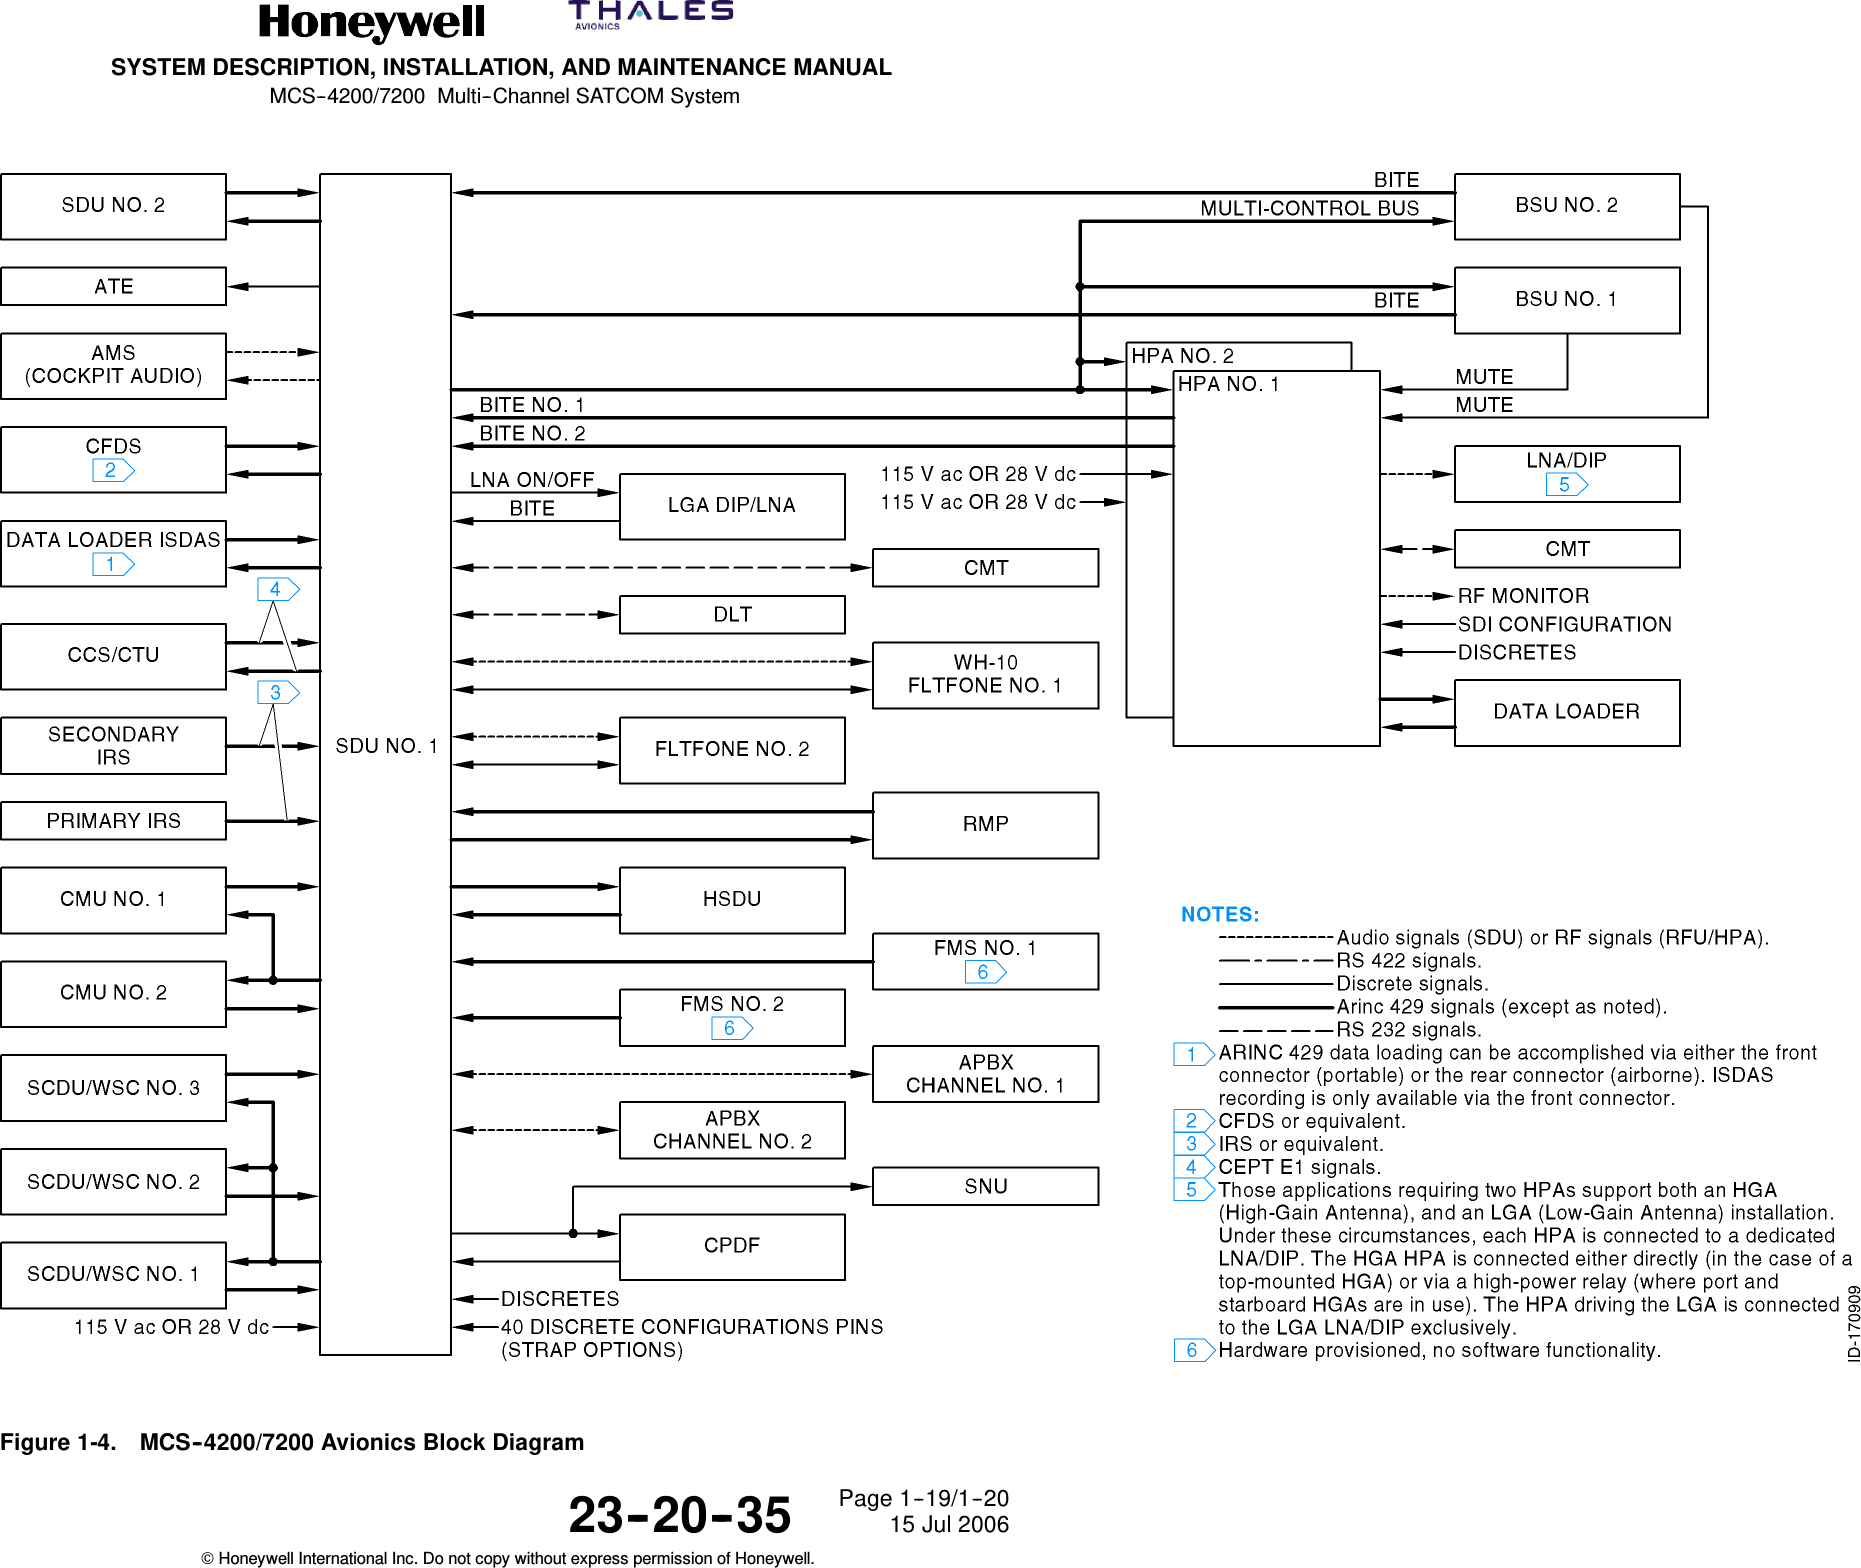 SYSTEM DESCRIPTION, INSTALLATION, AND MAINTENANCE MANUALMCS--4200/7200 Multi--Channel SATCOM System23--20--35 15 Jul 2006Honeywell International Inc. Do not copy without express permission of Honeywell.Page 1--19/1--20Figure 1-4. MCS--4200/7200 Avionics Block Diagram